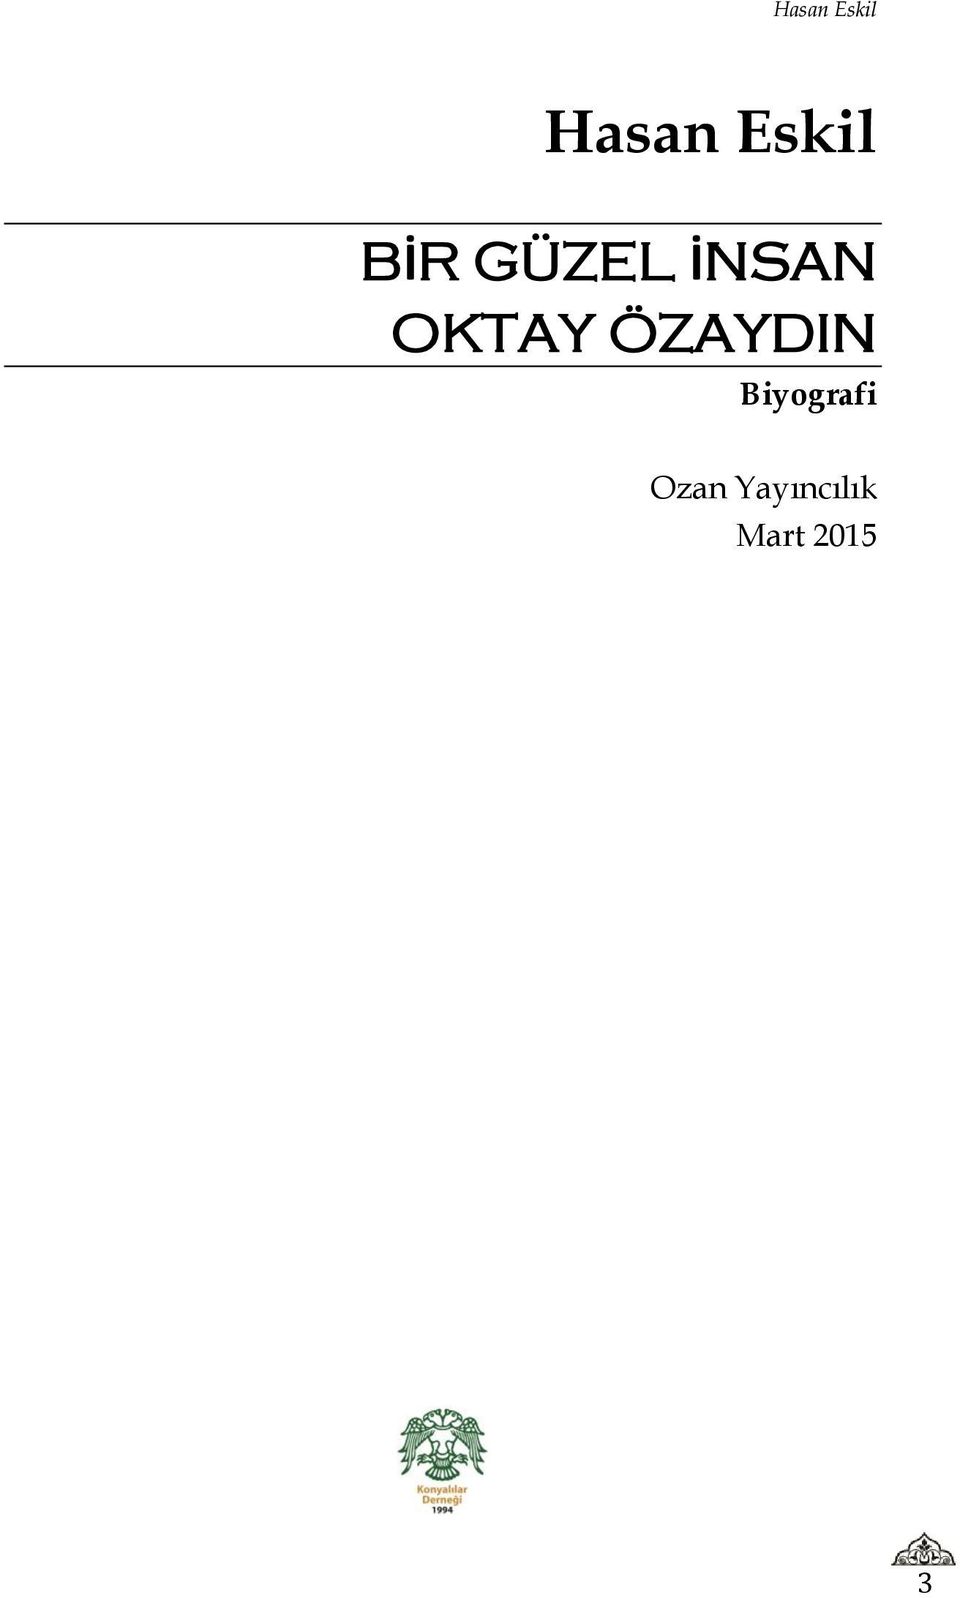 OKTAY ÖZAYDIN